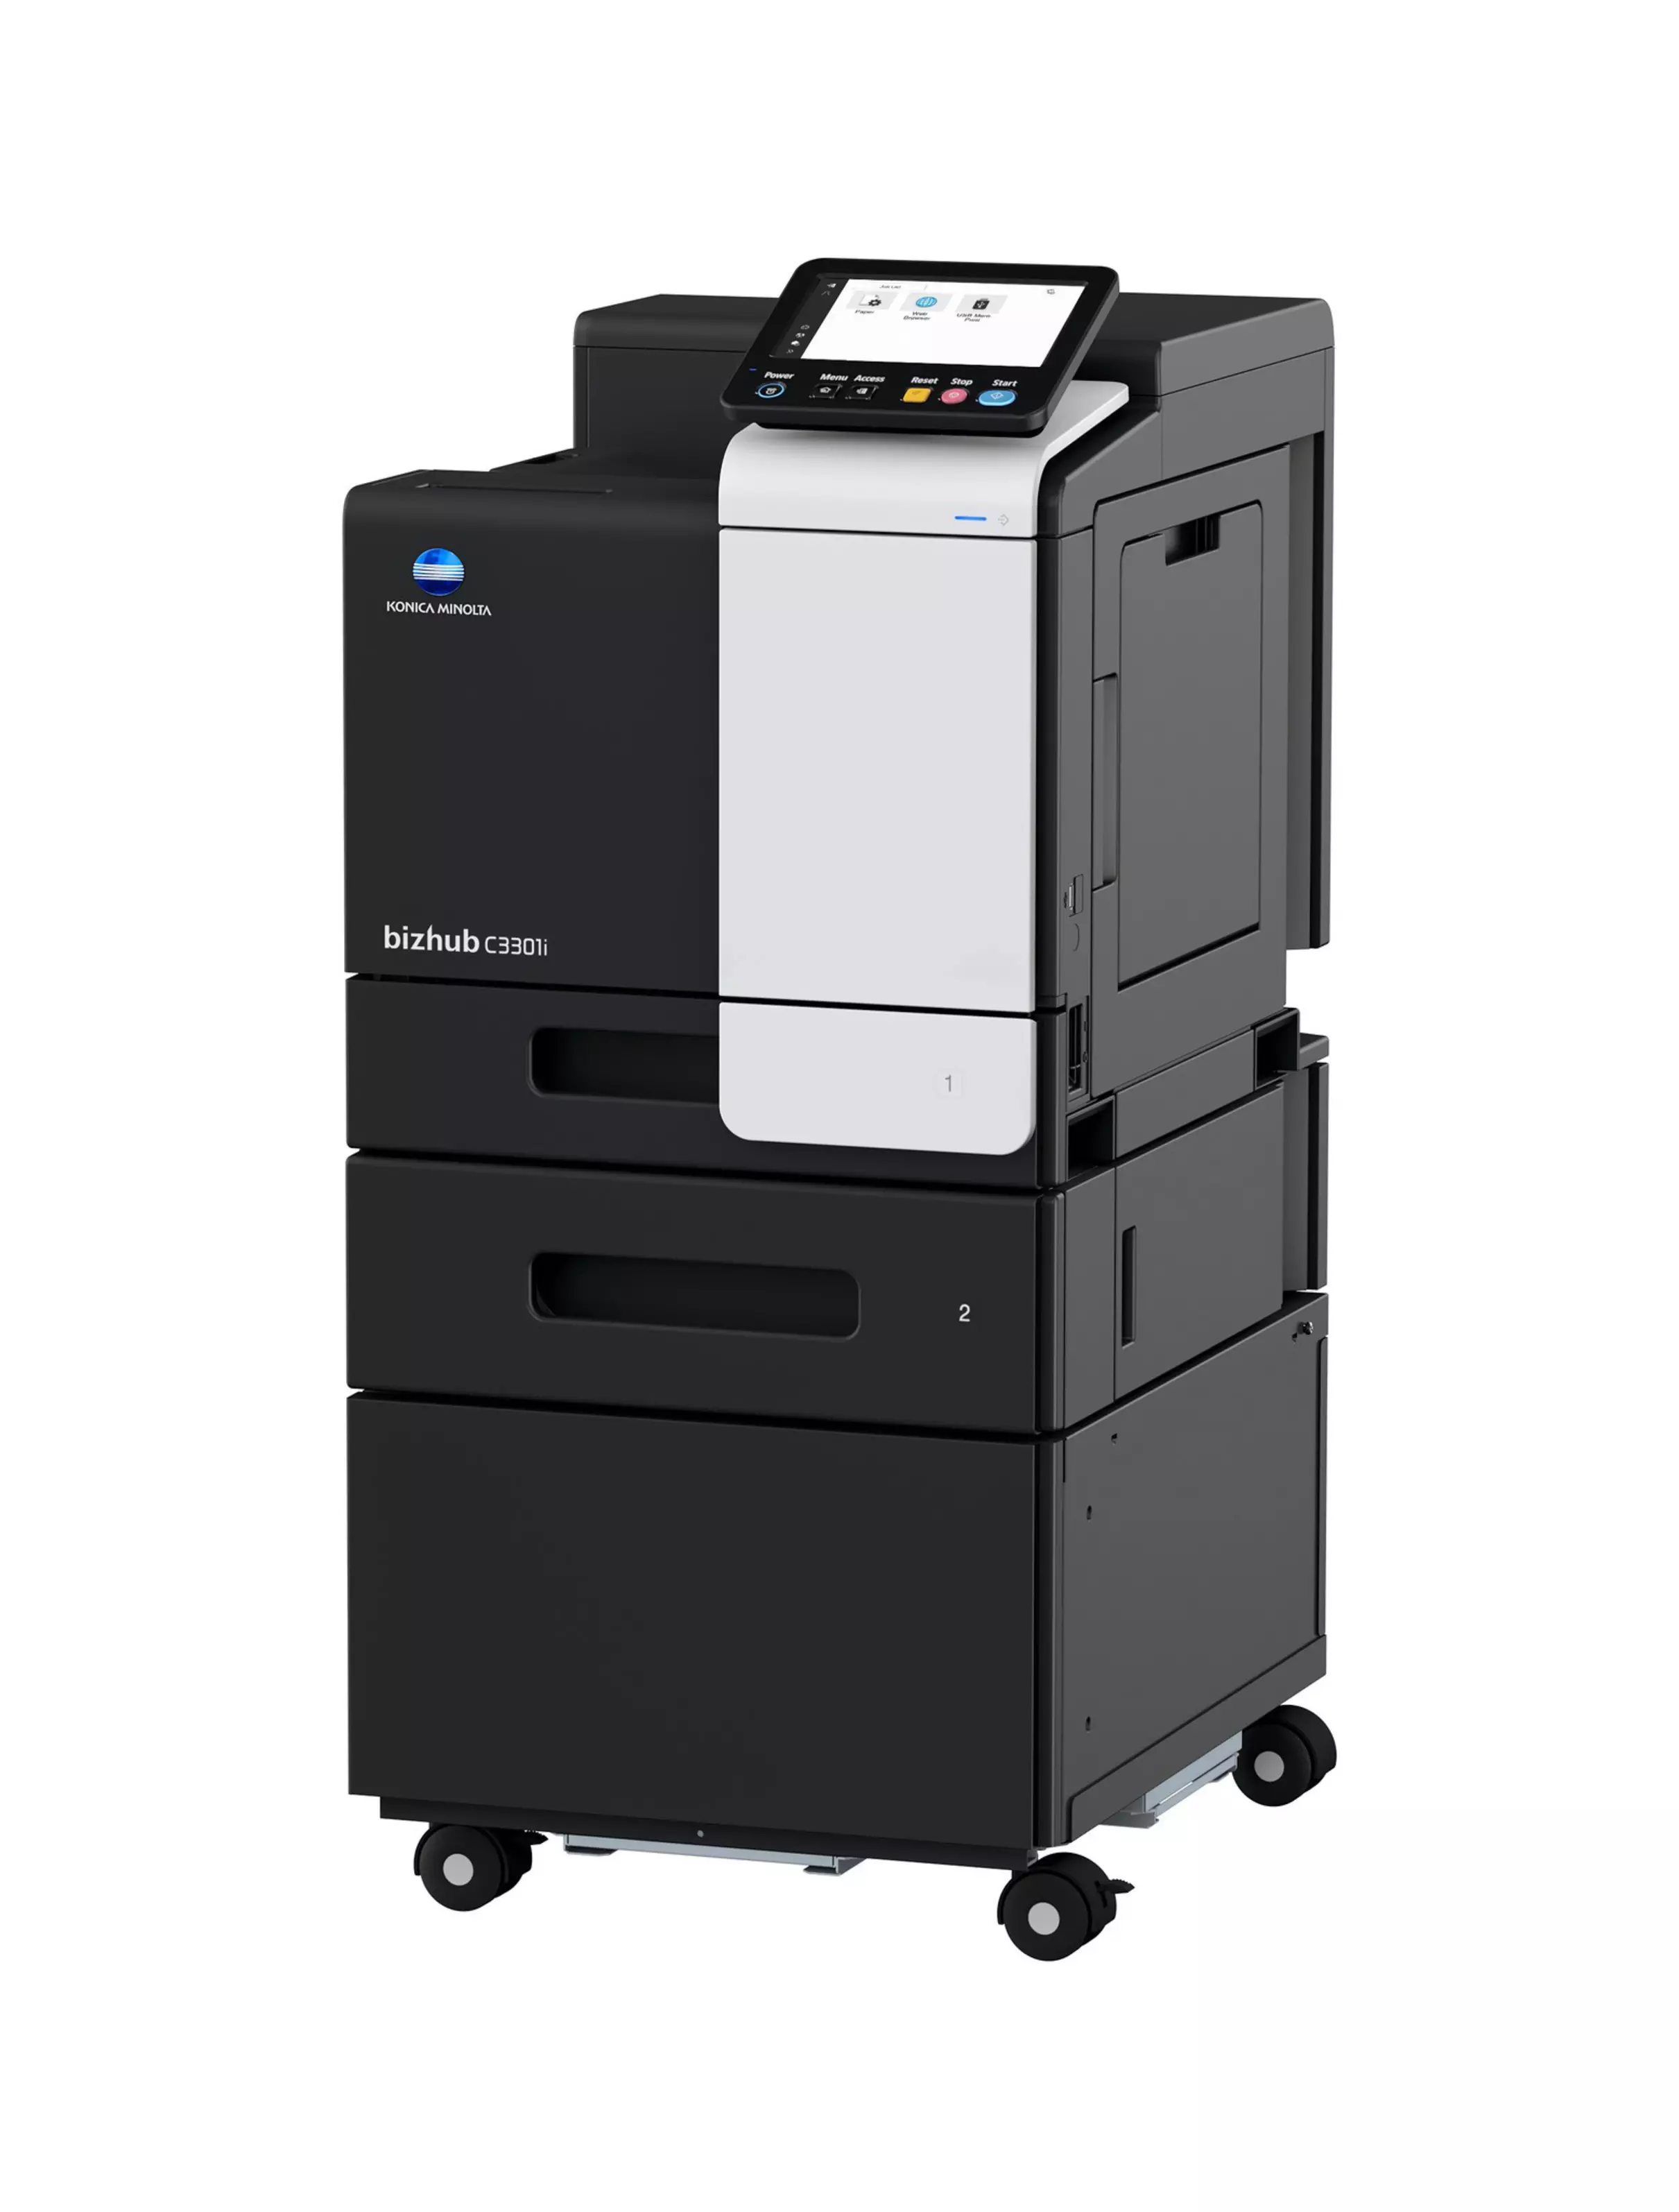 Konica Minolta i-series bizhub C3301i multifunctional printer